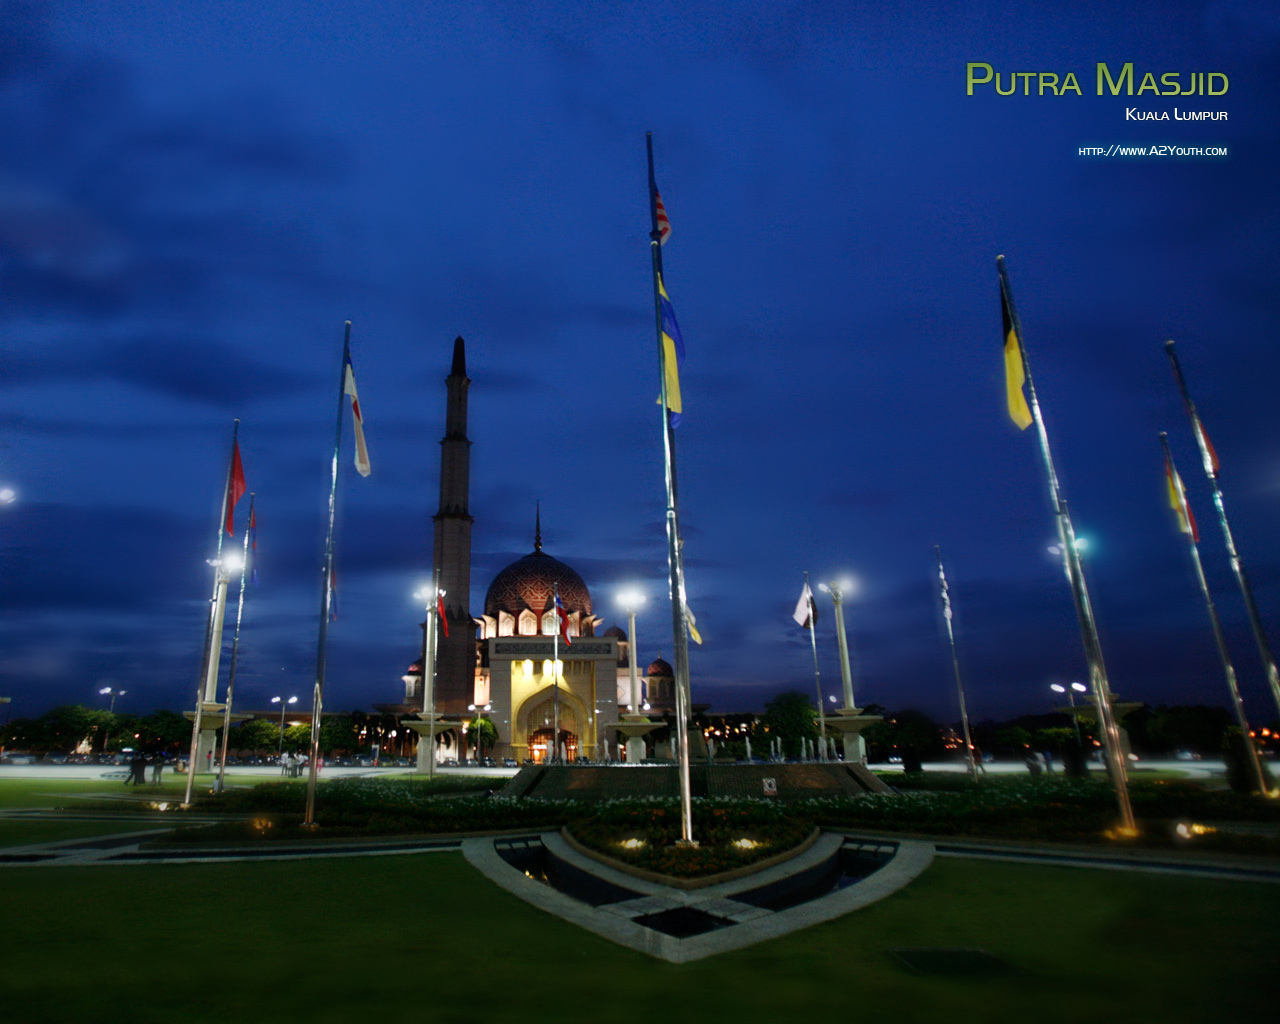 Putra Masjid Masjids Islamic Wallpaper A2youth